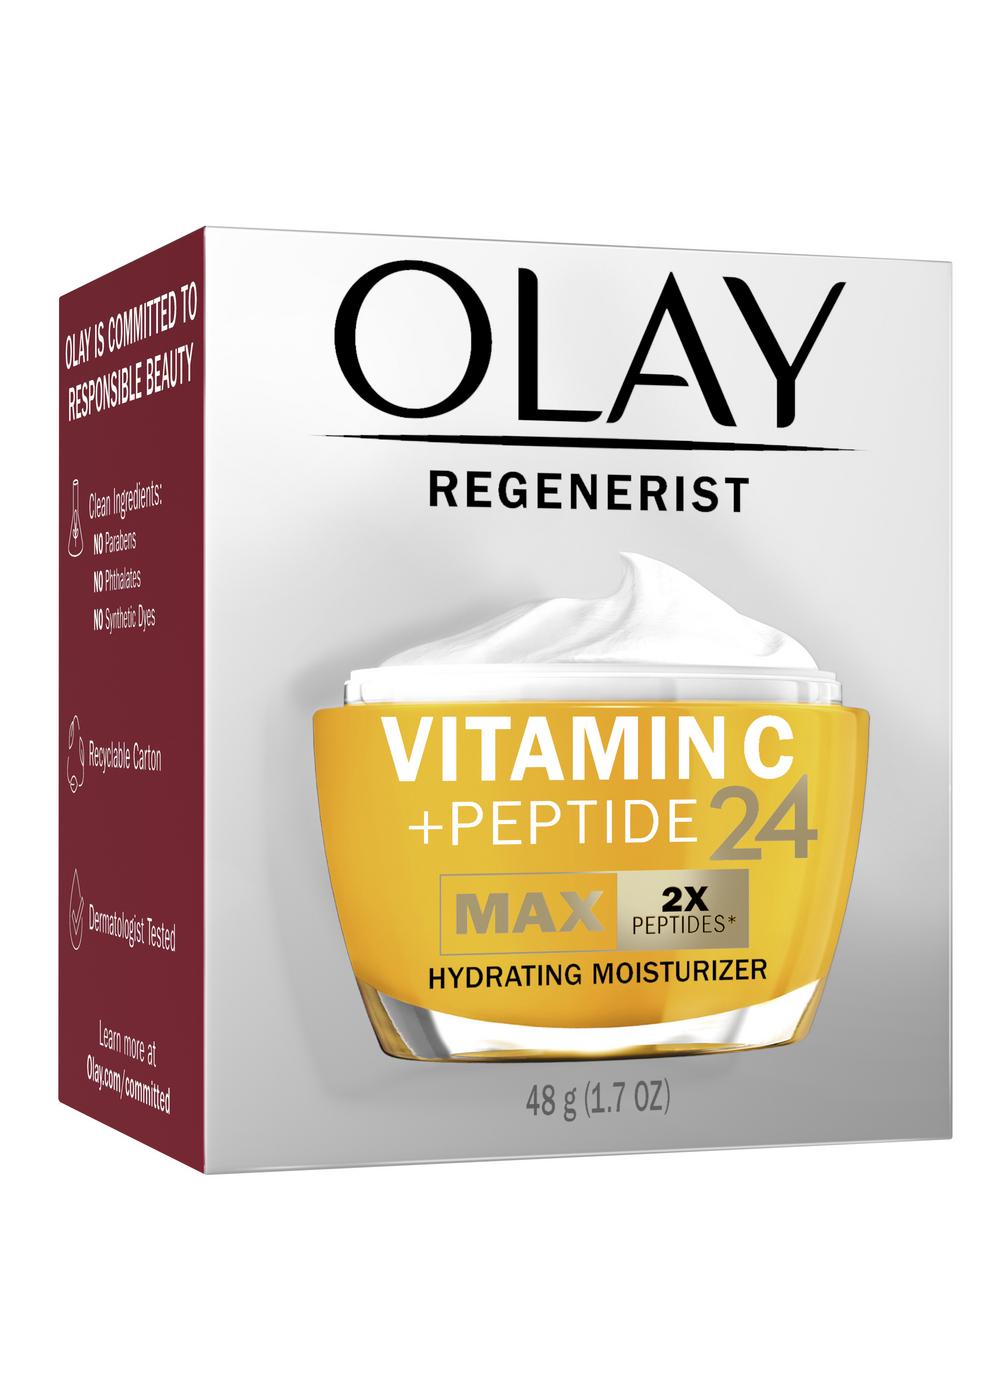 Olay Regenerist Vitamin C + Peptide 24 Max Hydrating Moisturizer; image 1 of 2